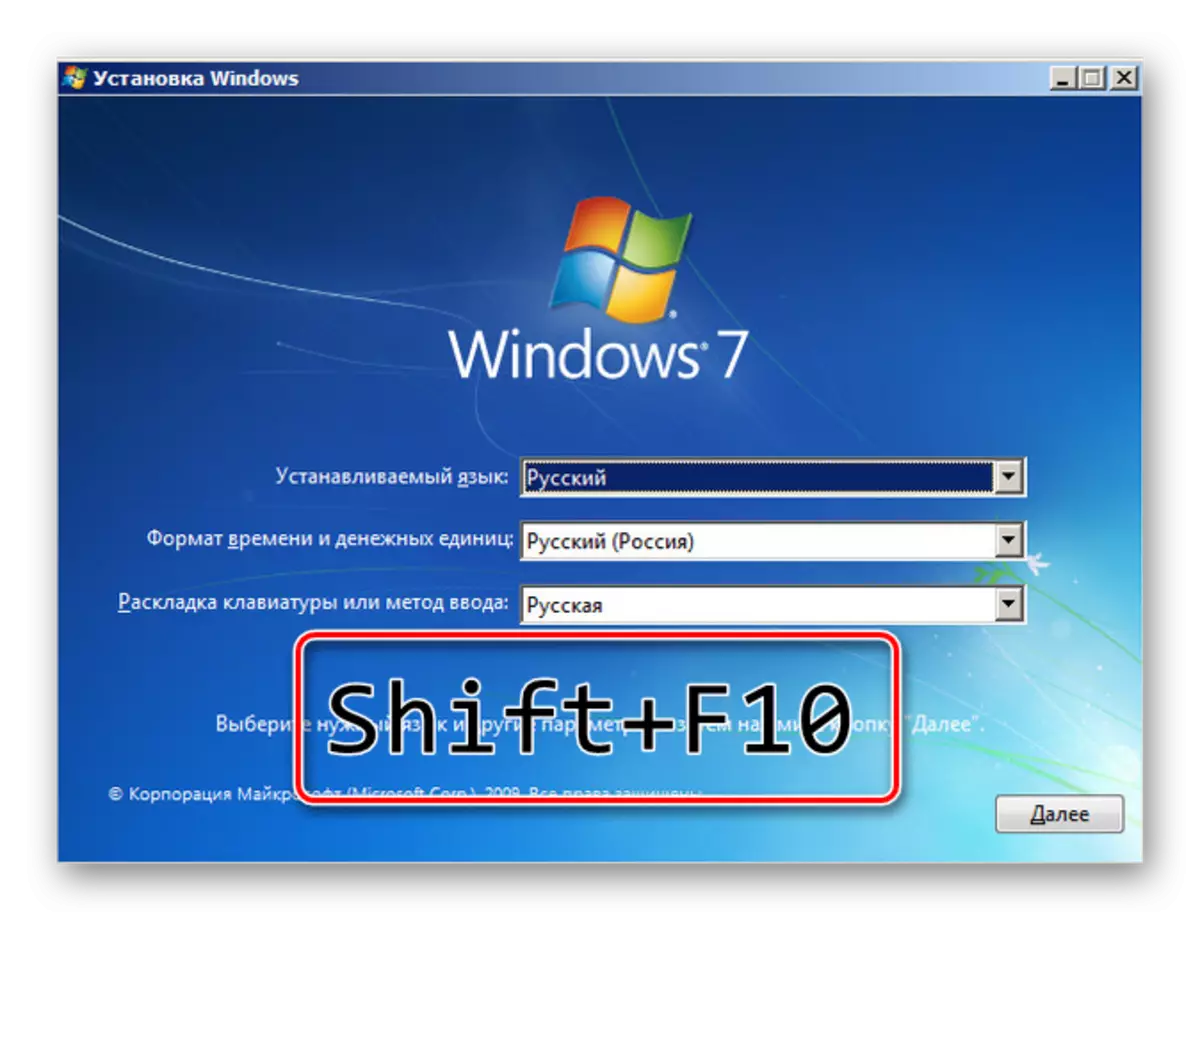 Windows 7 ကို install လုပ်သည့်အခါ command line သို့ပြောင်းပါ